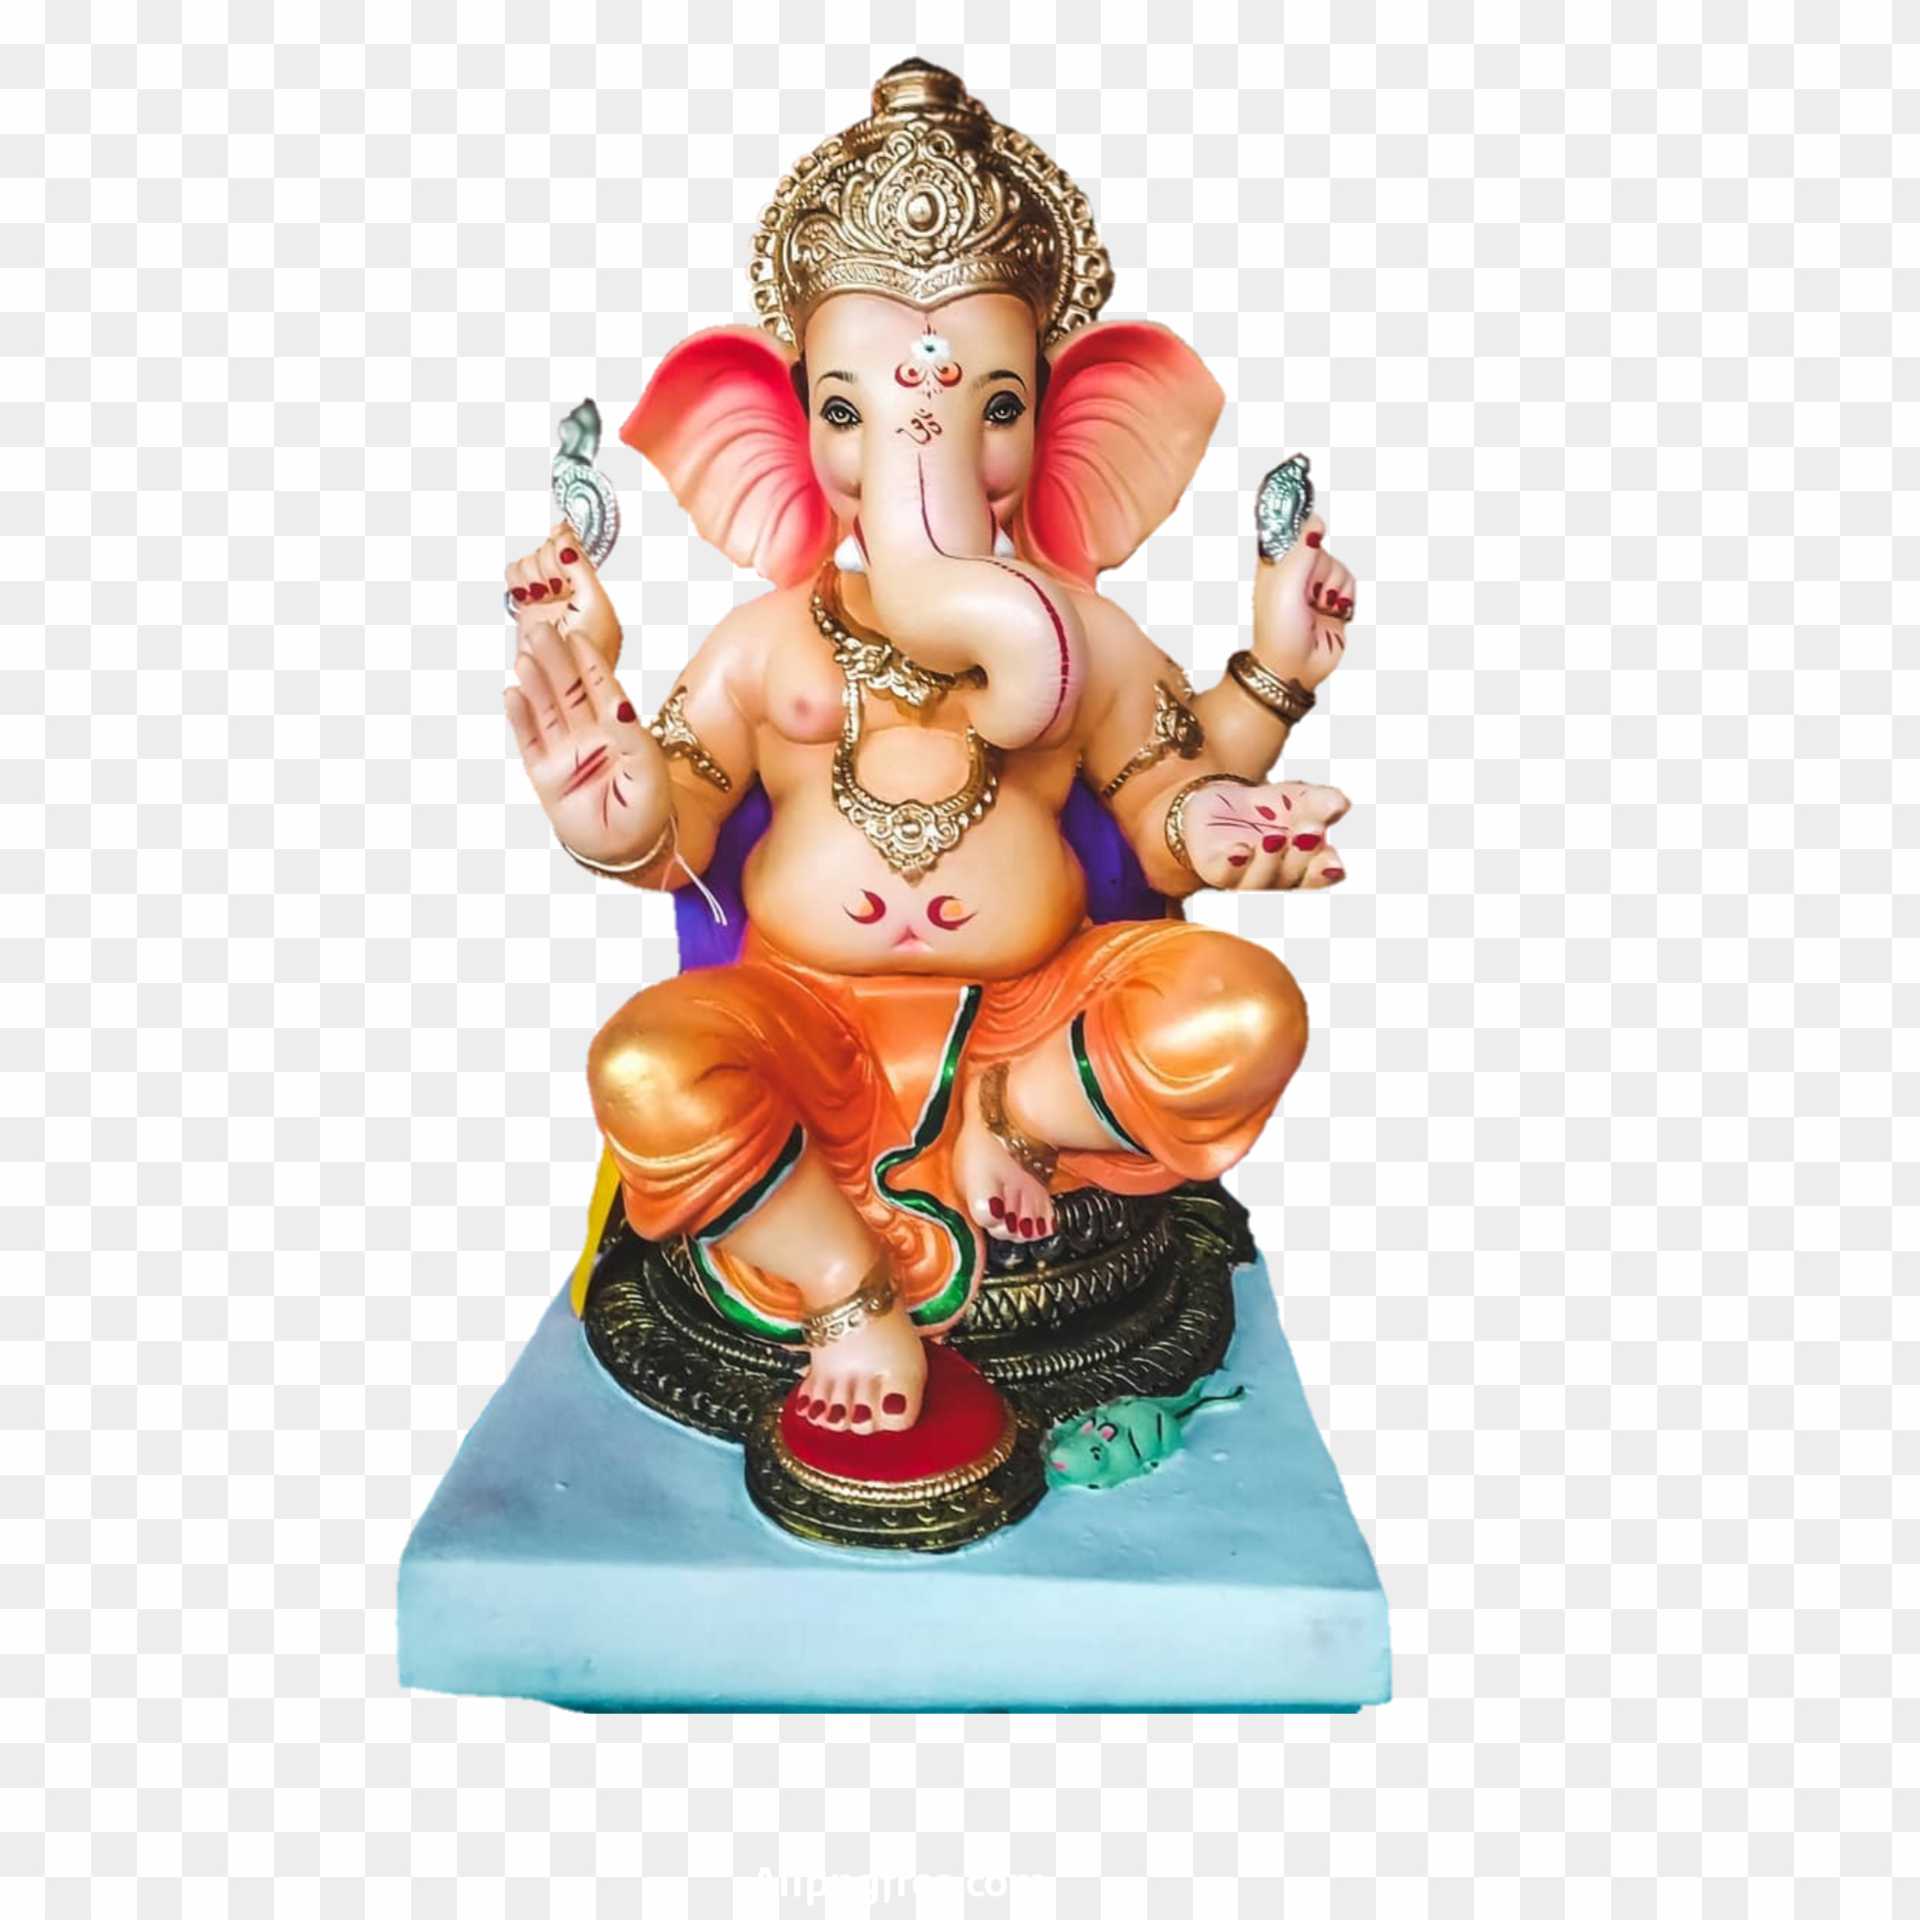 Ganesh chaturthi PNG transparent image - transparent background PNG  cliparts free download | AllPNGFree